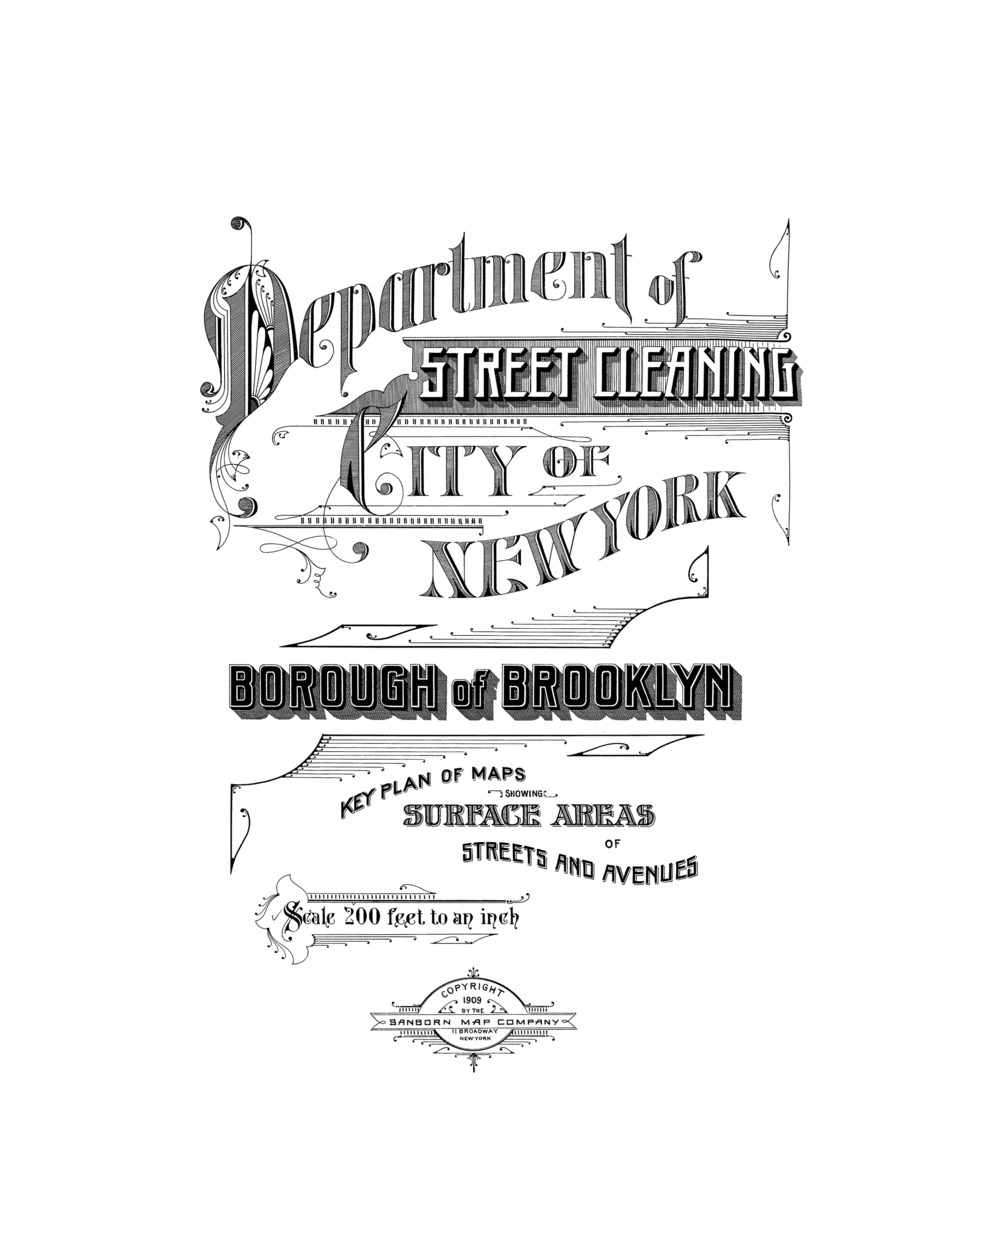 Brooklyn Street Cleaning 1909.jpg